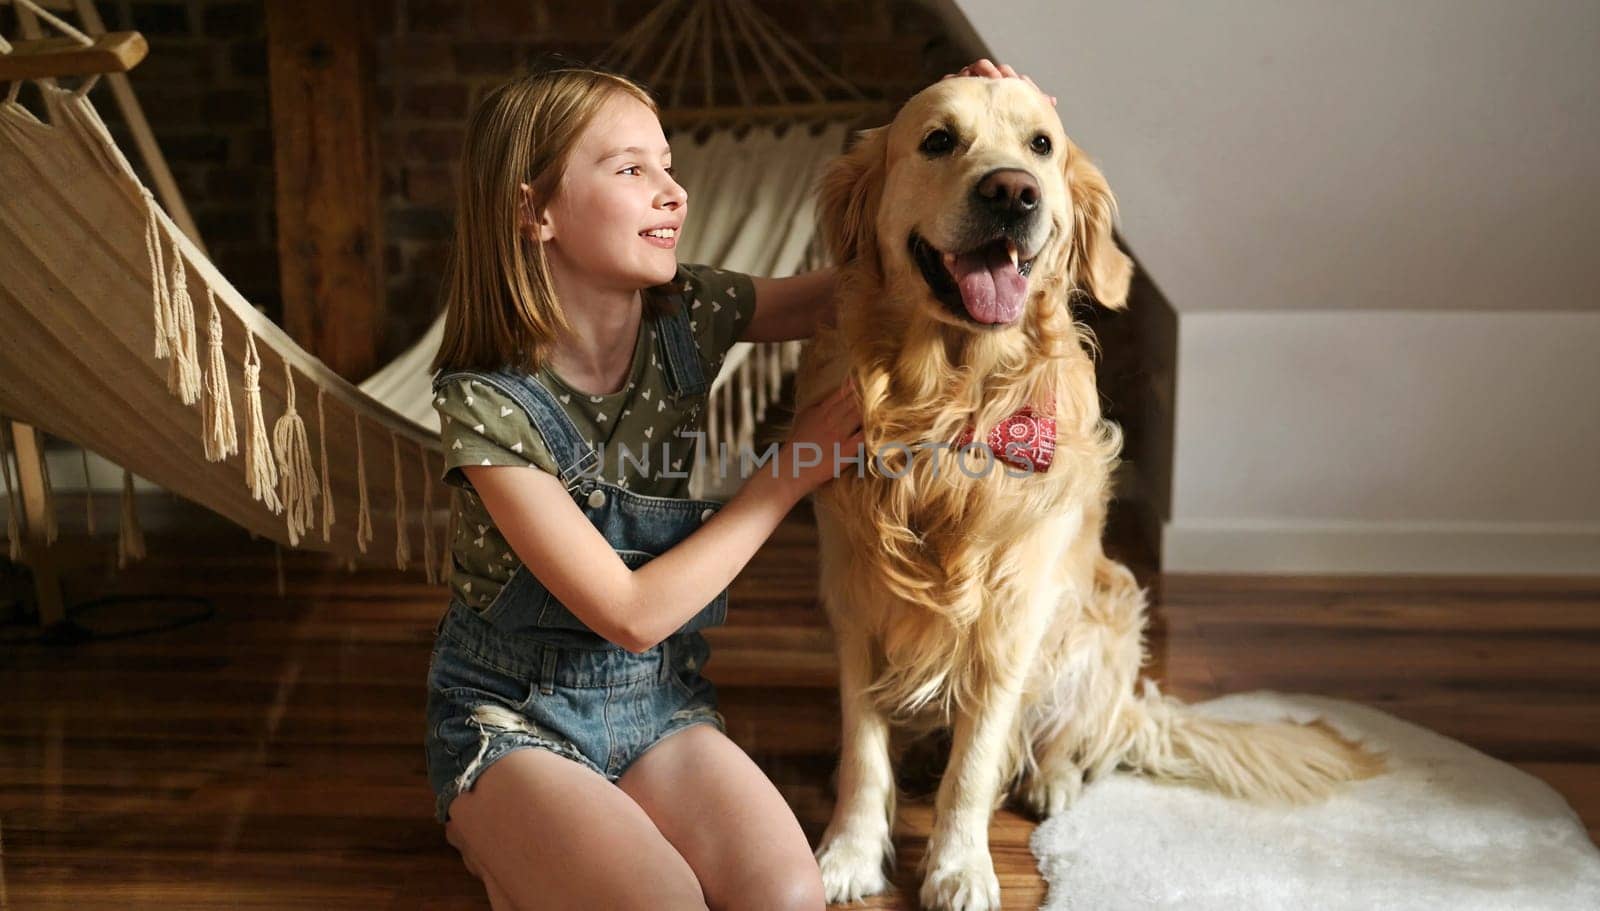 Girl with golden retriever dog indoors by GekaSkr